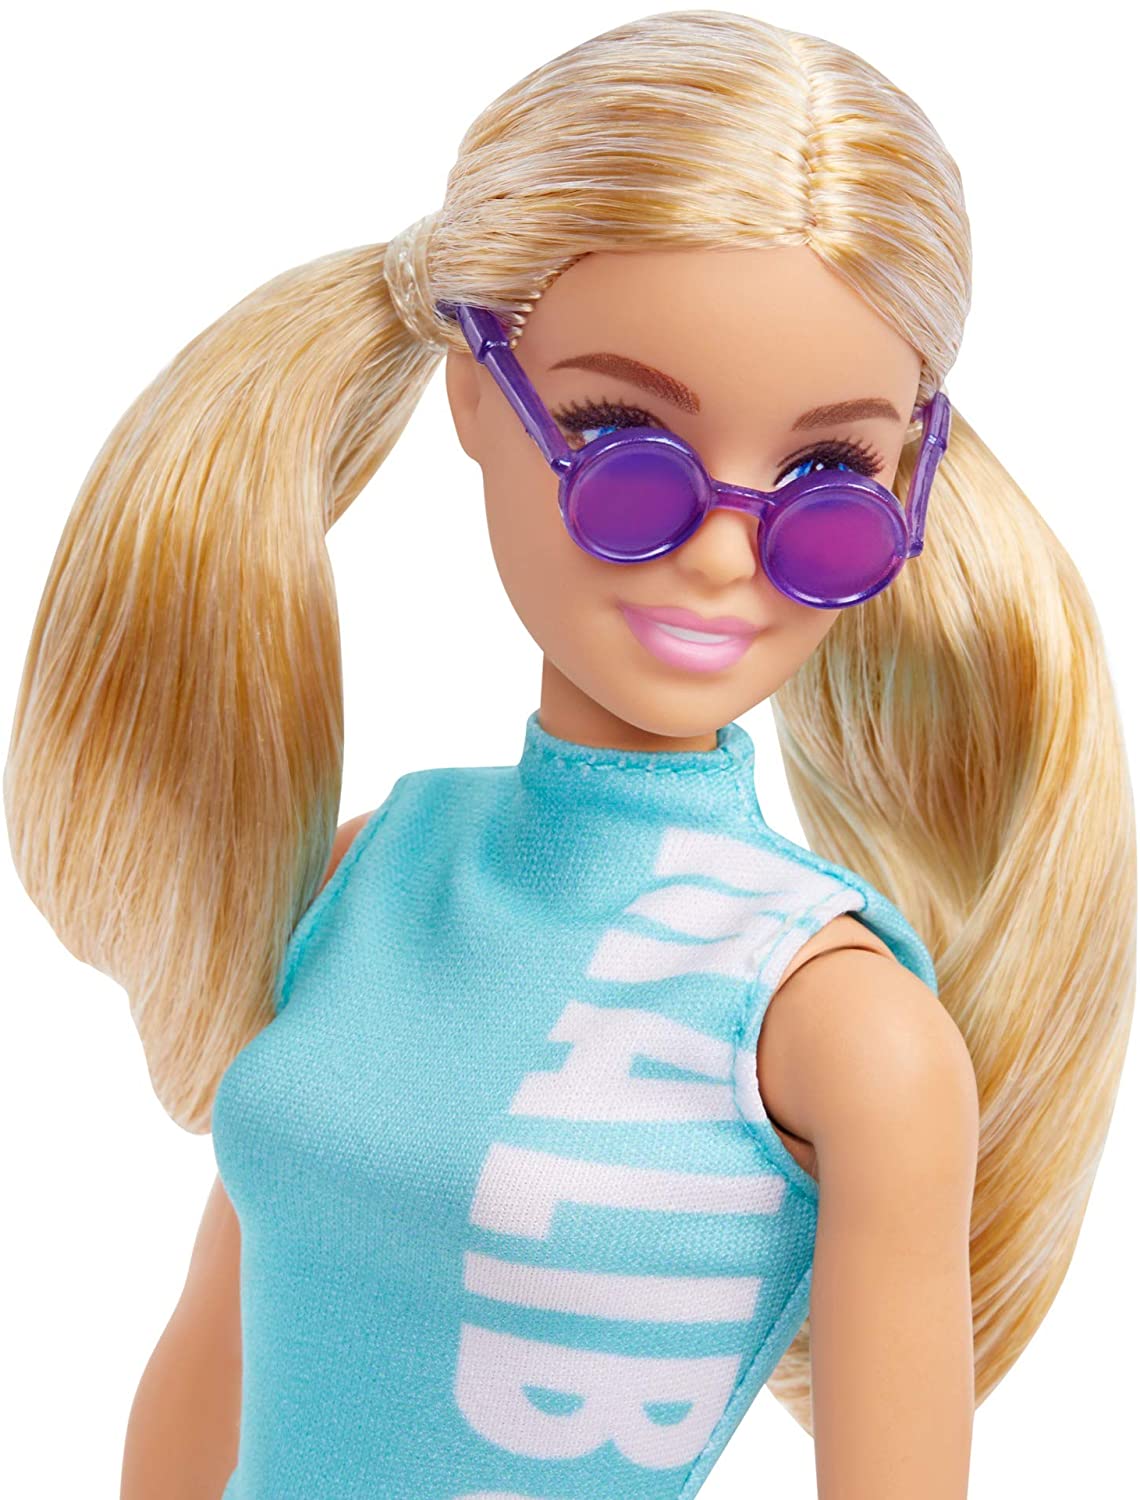 AZONE Labelshop AKIHABARA OFFICIAL BLOG Barbie Doll